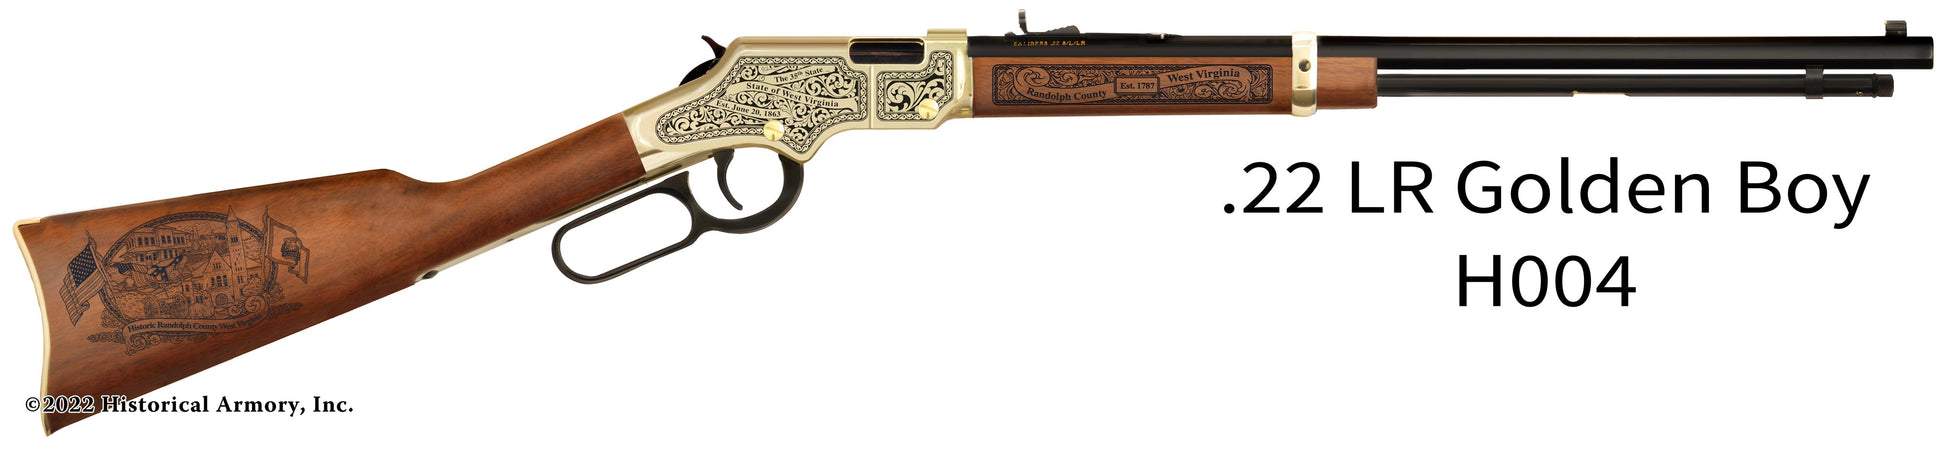 Randolph County West Virginia Engraved Henry Golden Boy Rifle